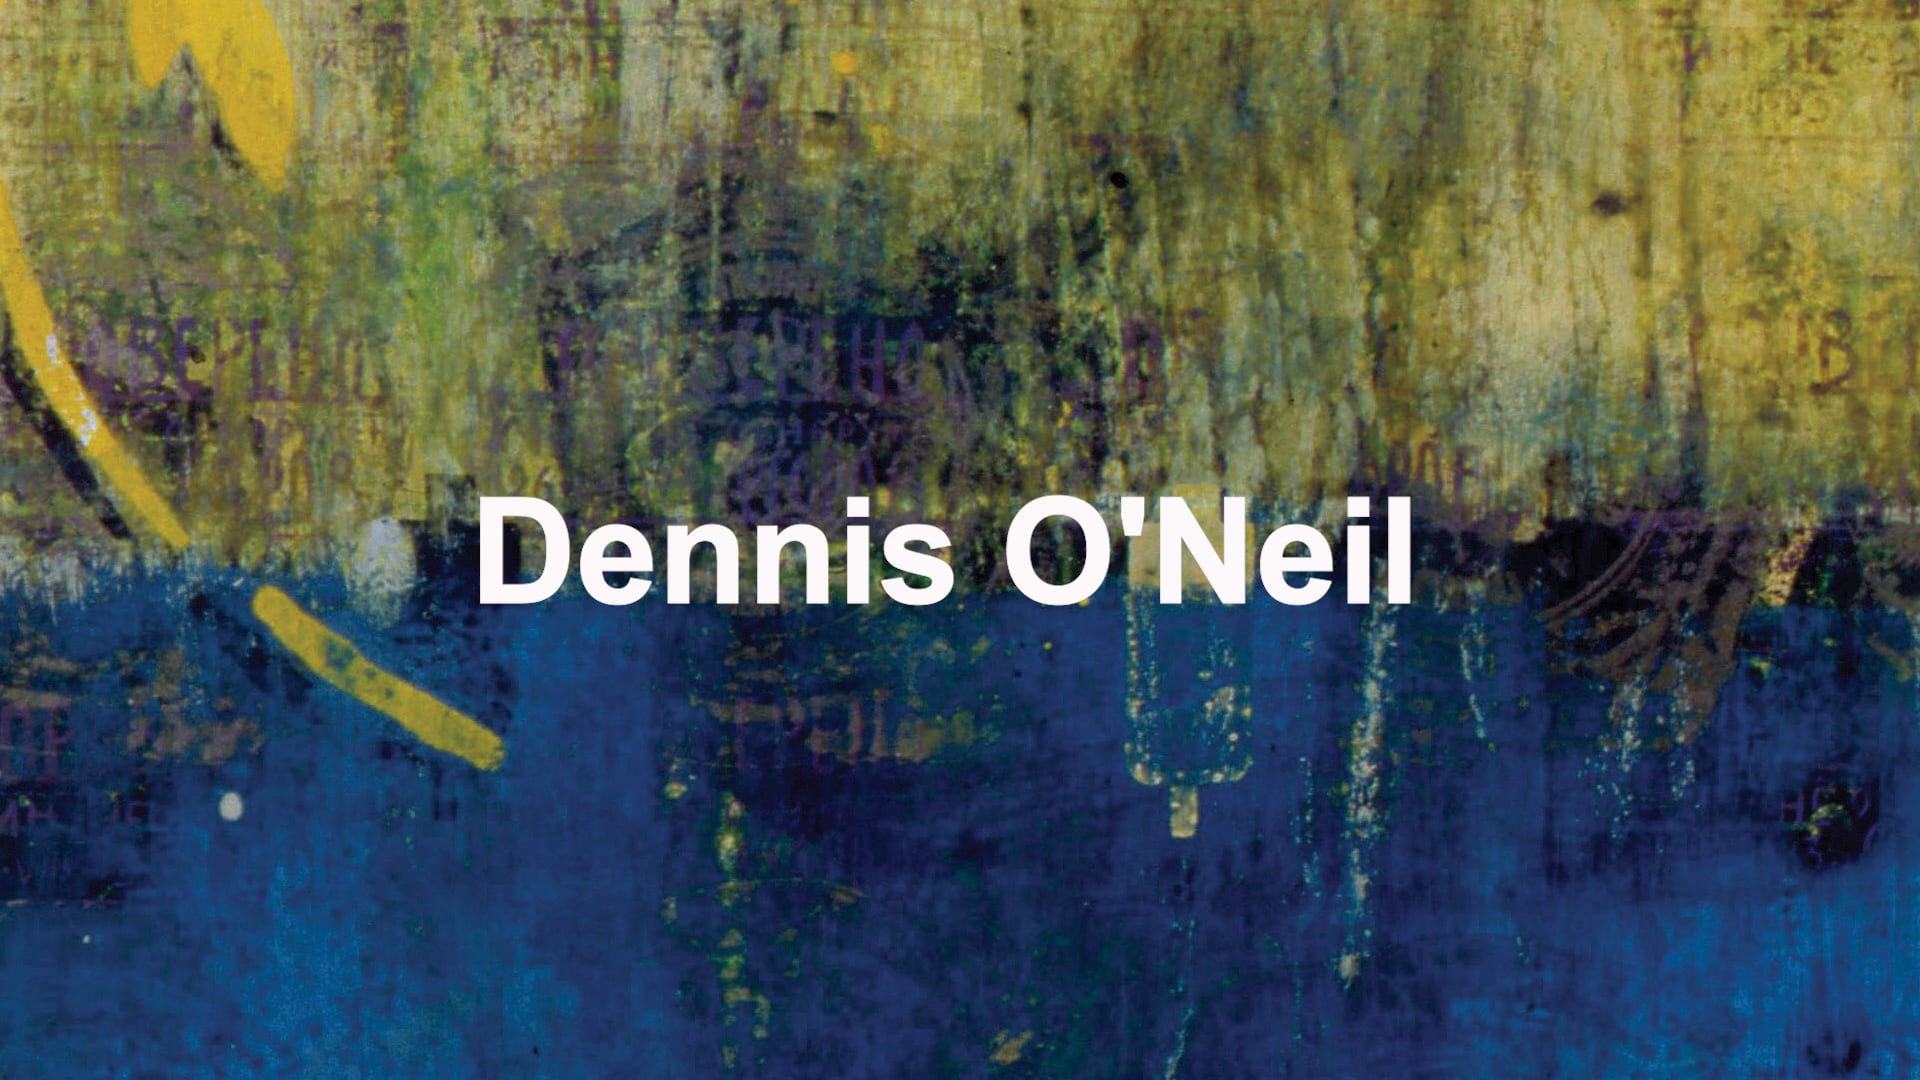 Dennis O'Neil: Process & Innovation